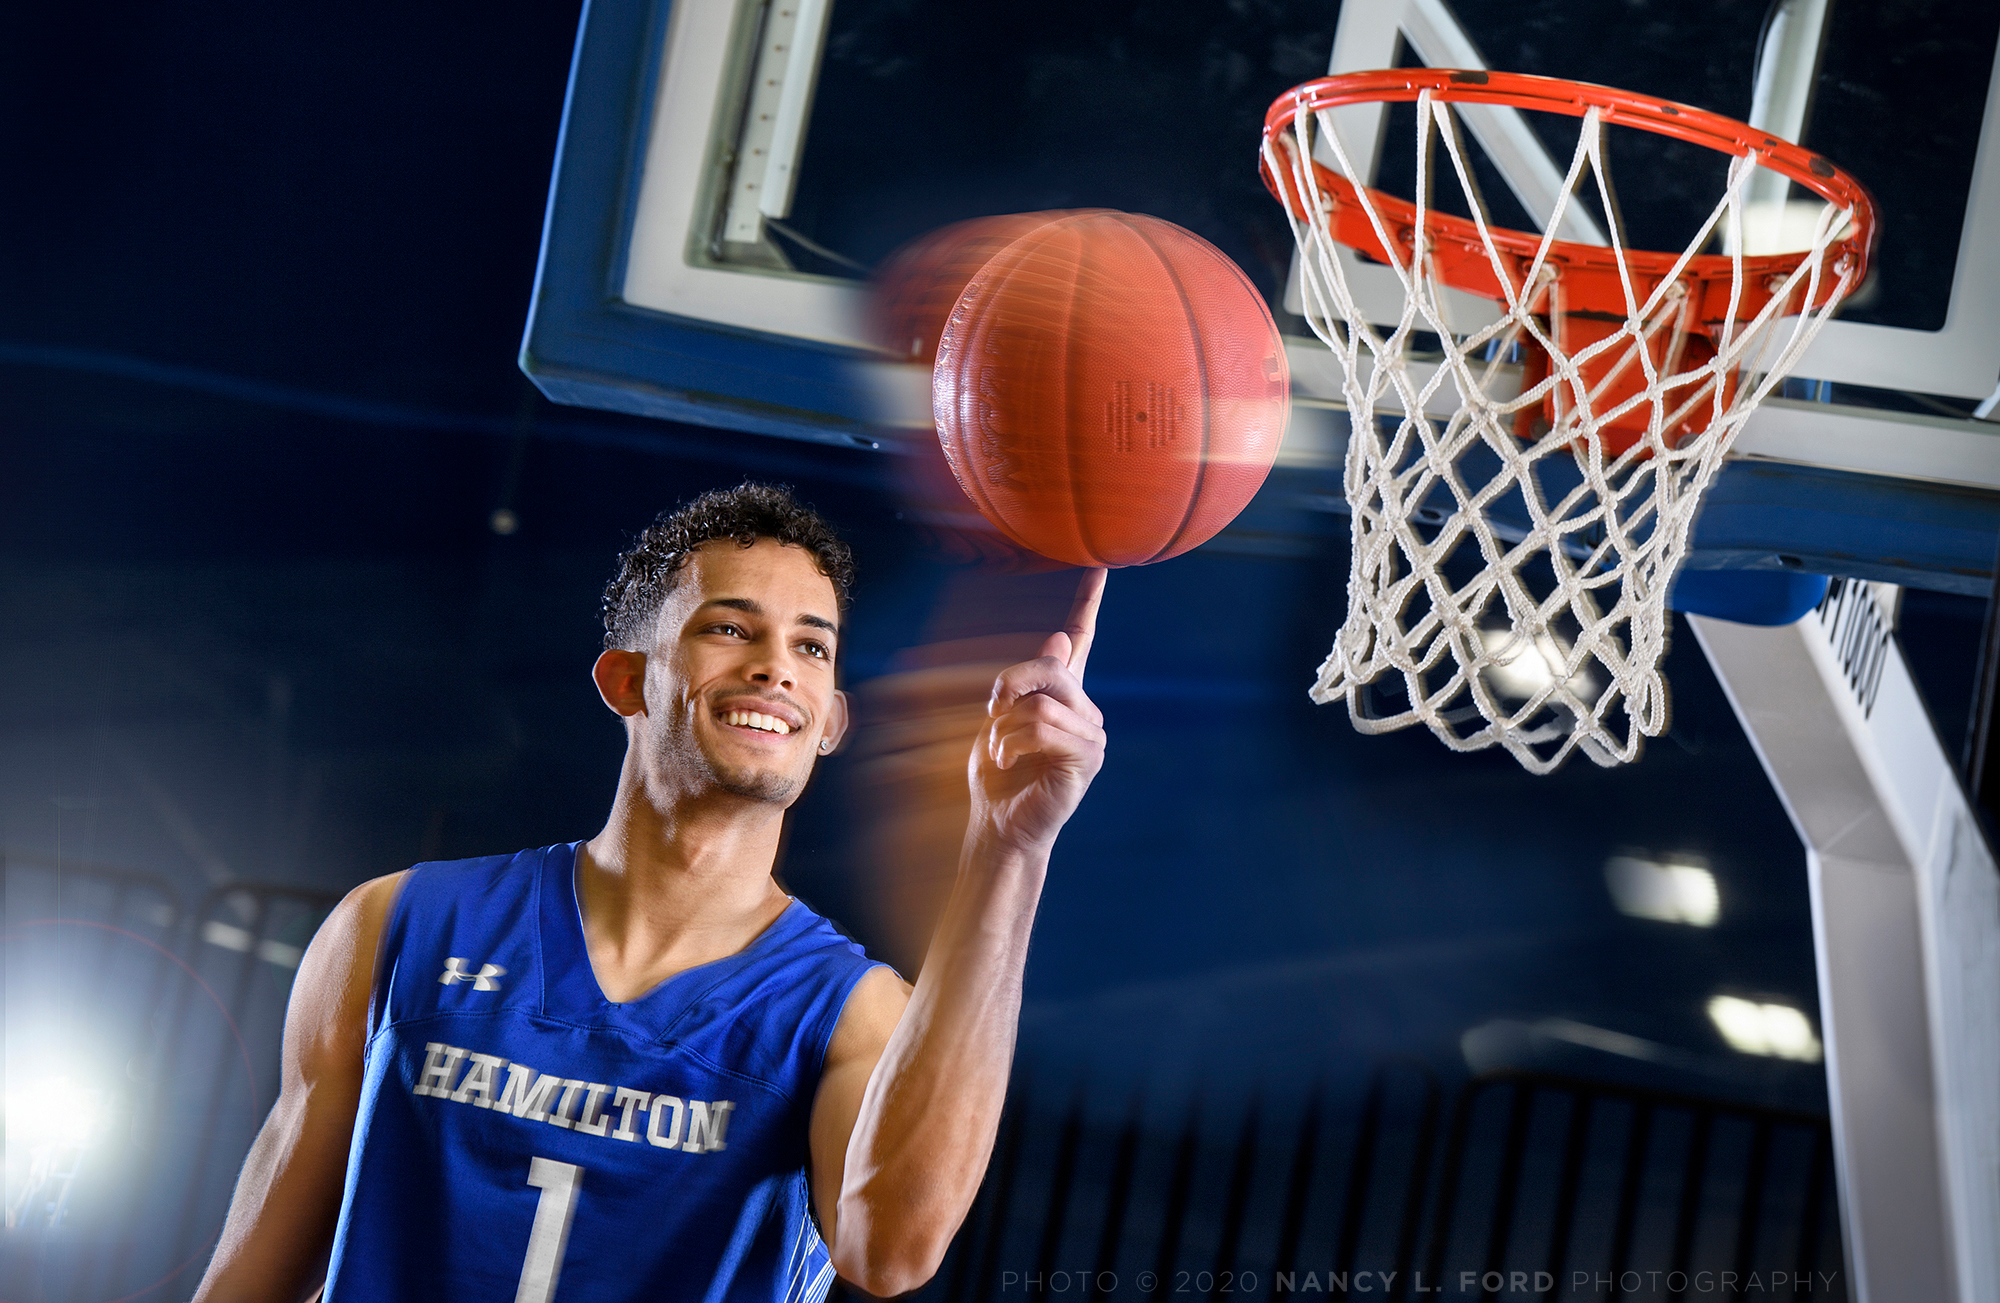 Kena Gilmour spins a basketball on his finger under a basket